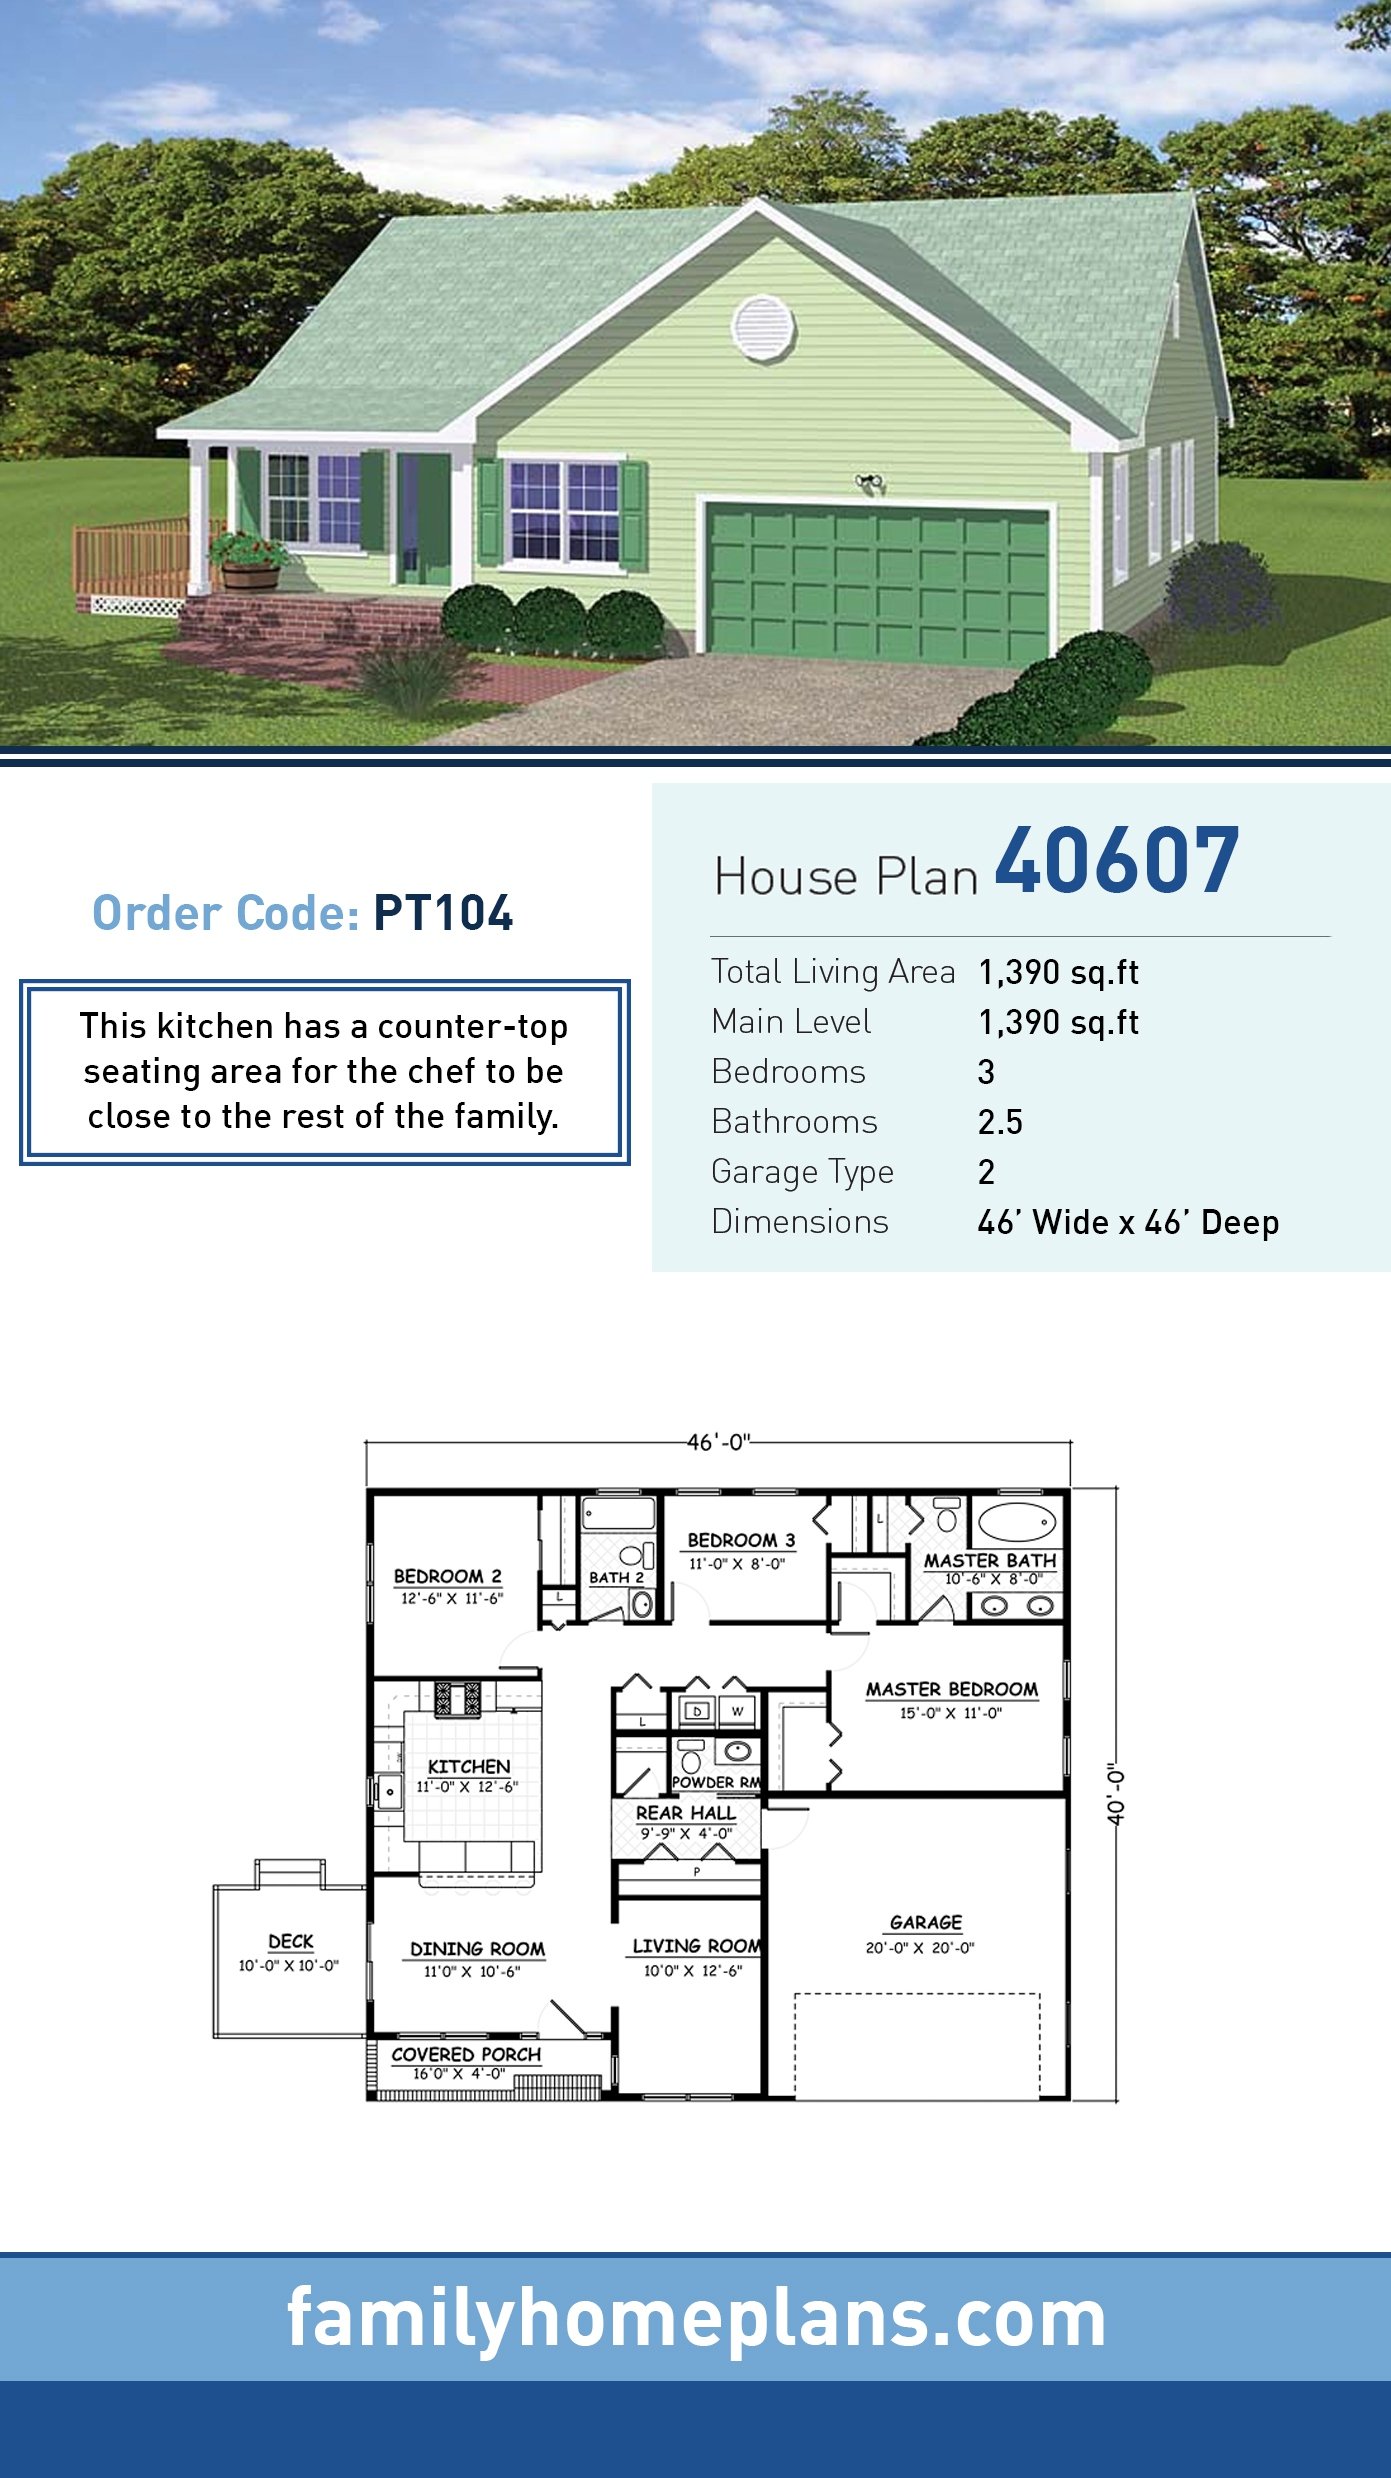 House Plan 40607